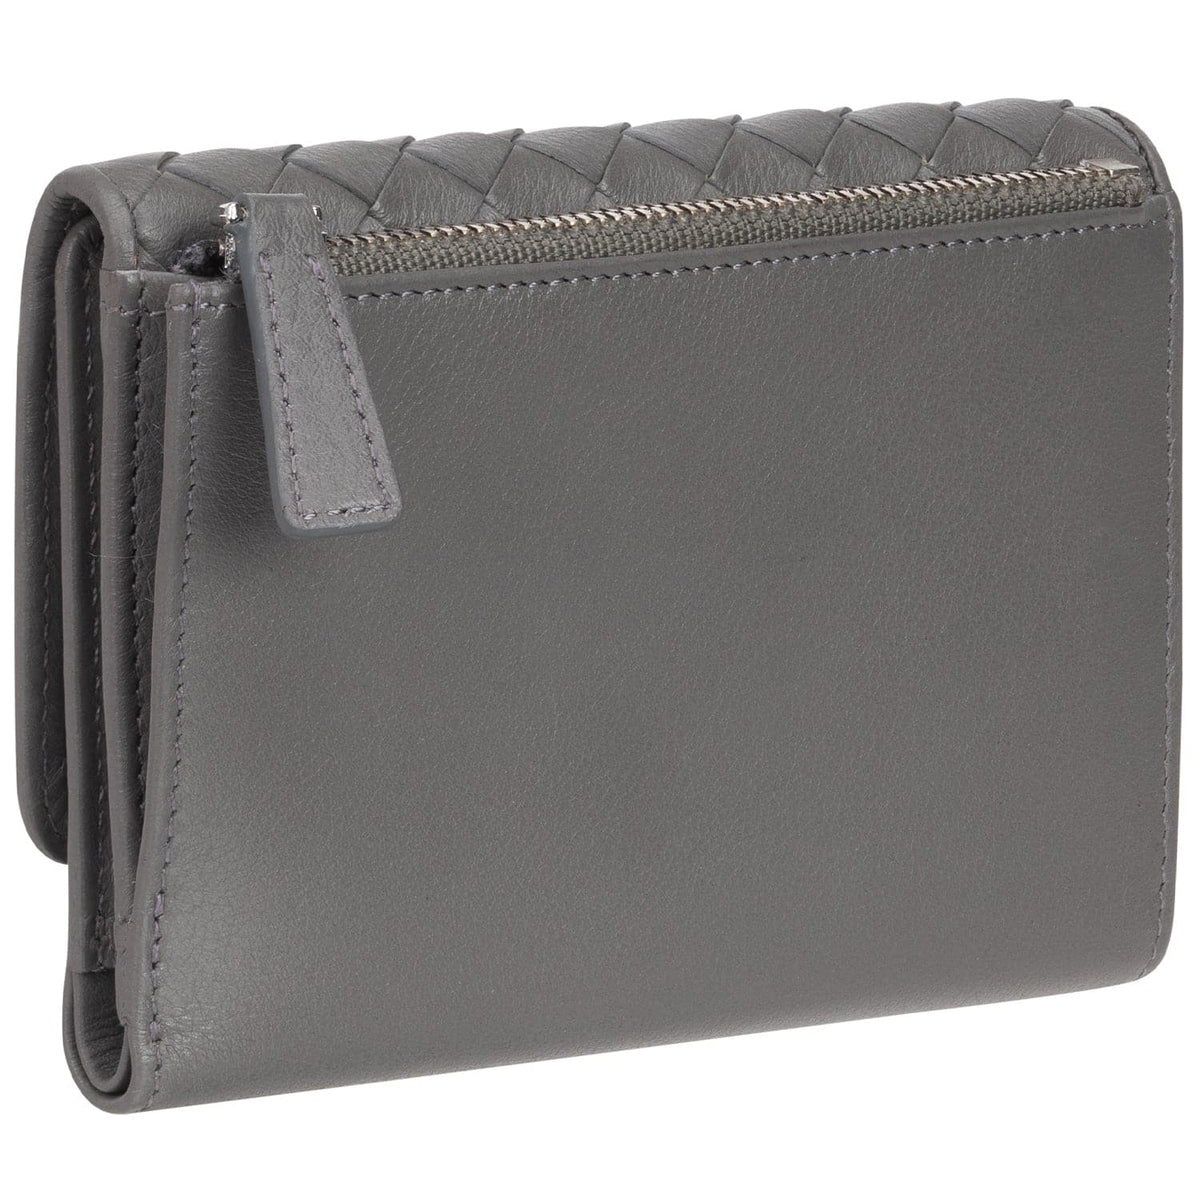 Mancini Women's Basket Weave RFID Secure Medium Clutch Wallet